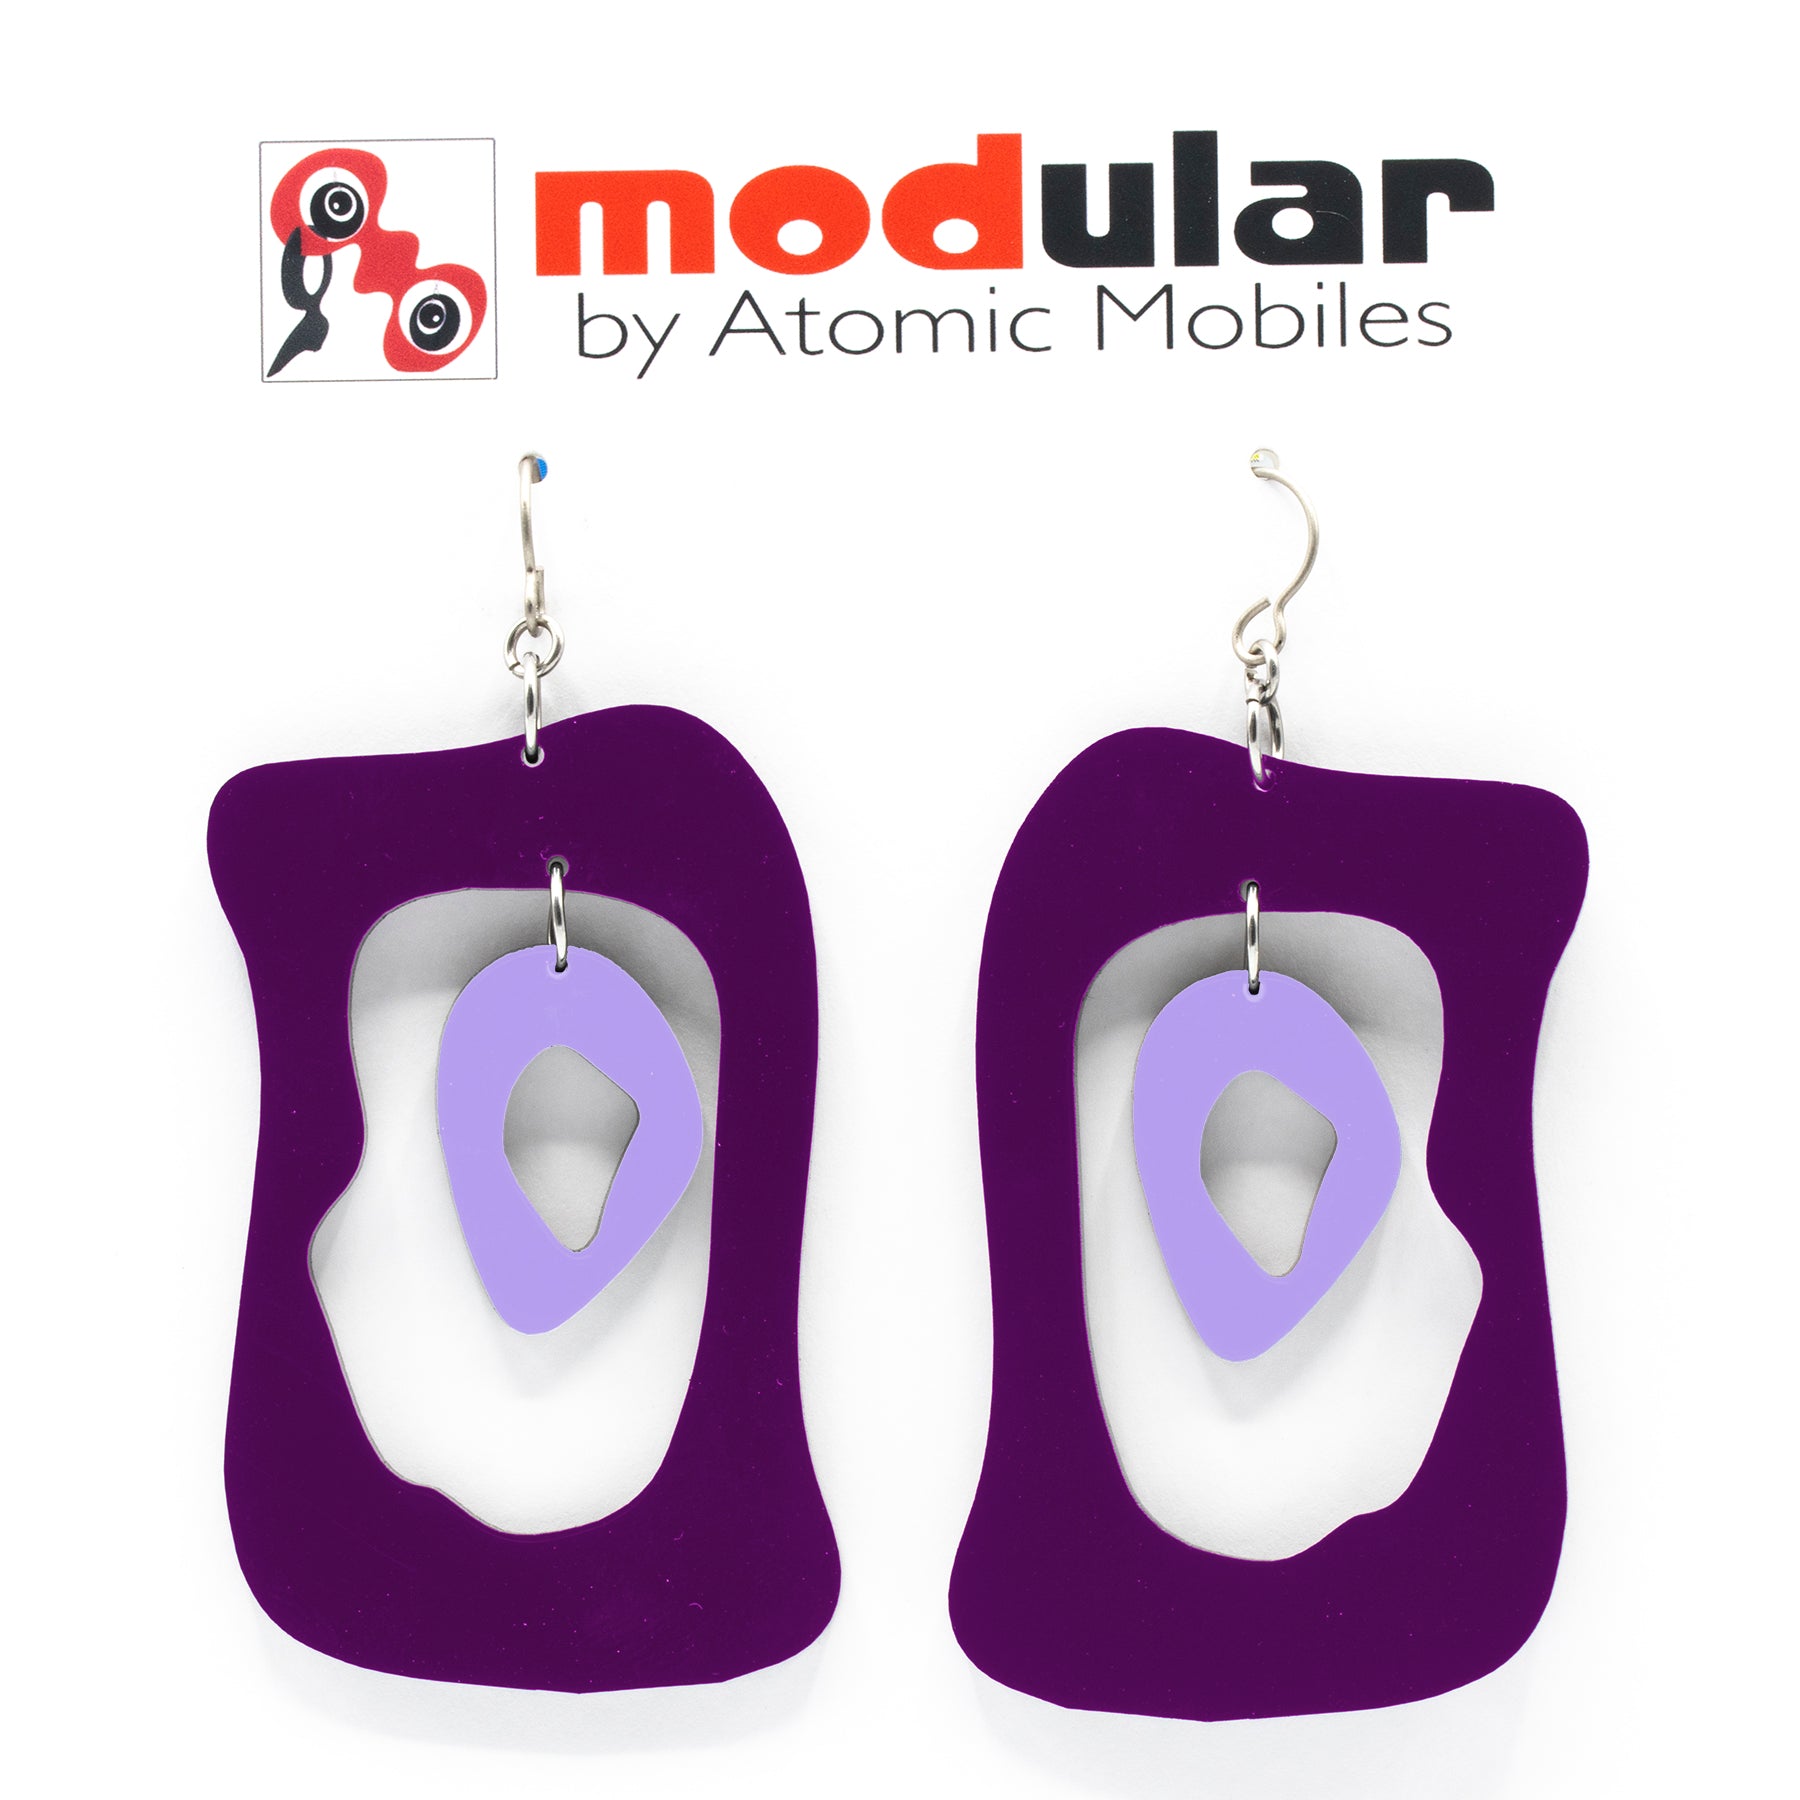 MODular Earrings - Modern Bliss Statement Earrings in Purple by AtomicMobiles.com - retro era inspired mod handmade jewelry